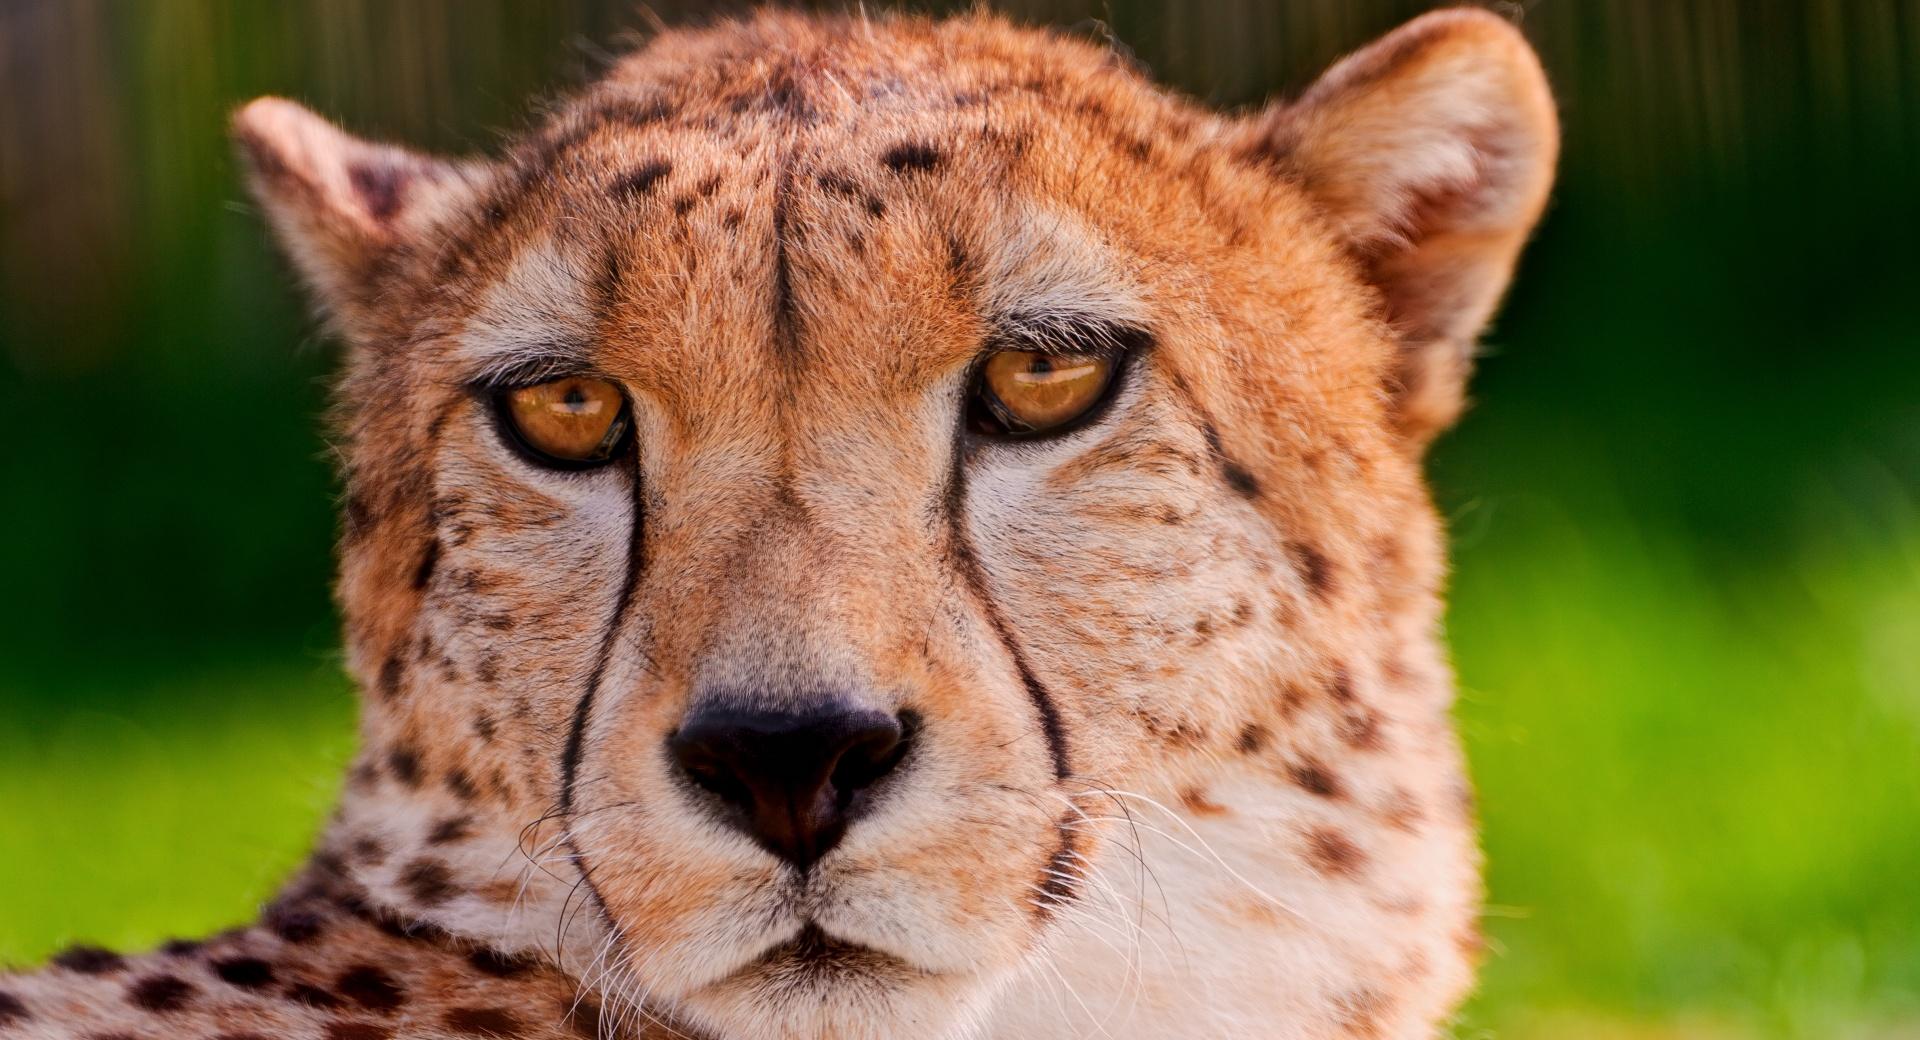 Cheetah Portrait wallpapers HD quality